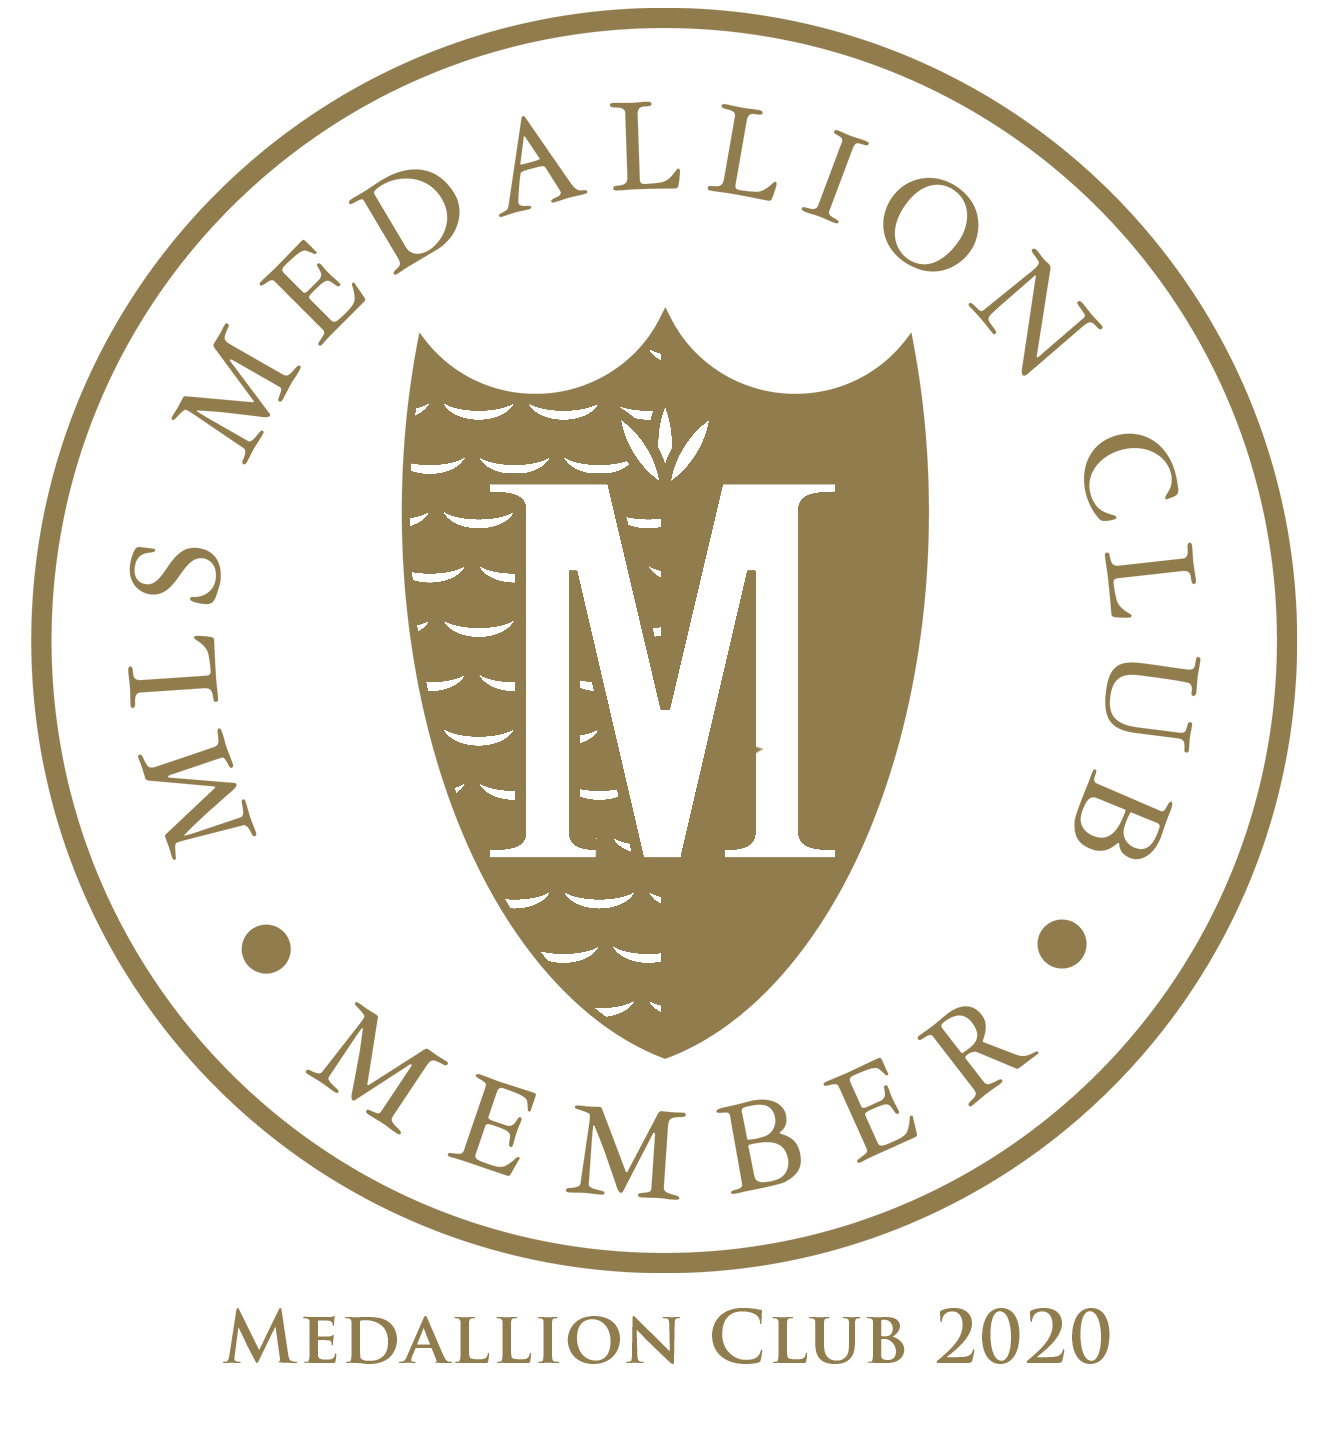 MLS Medallion Club Member 2020